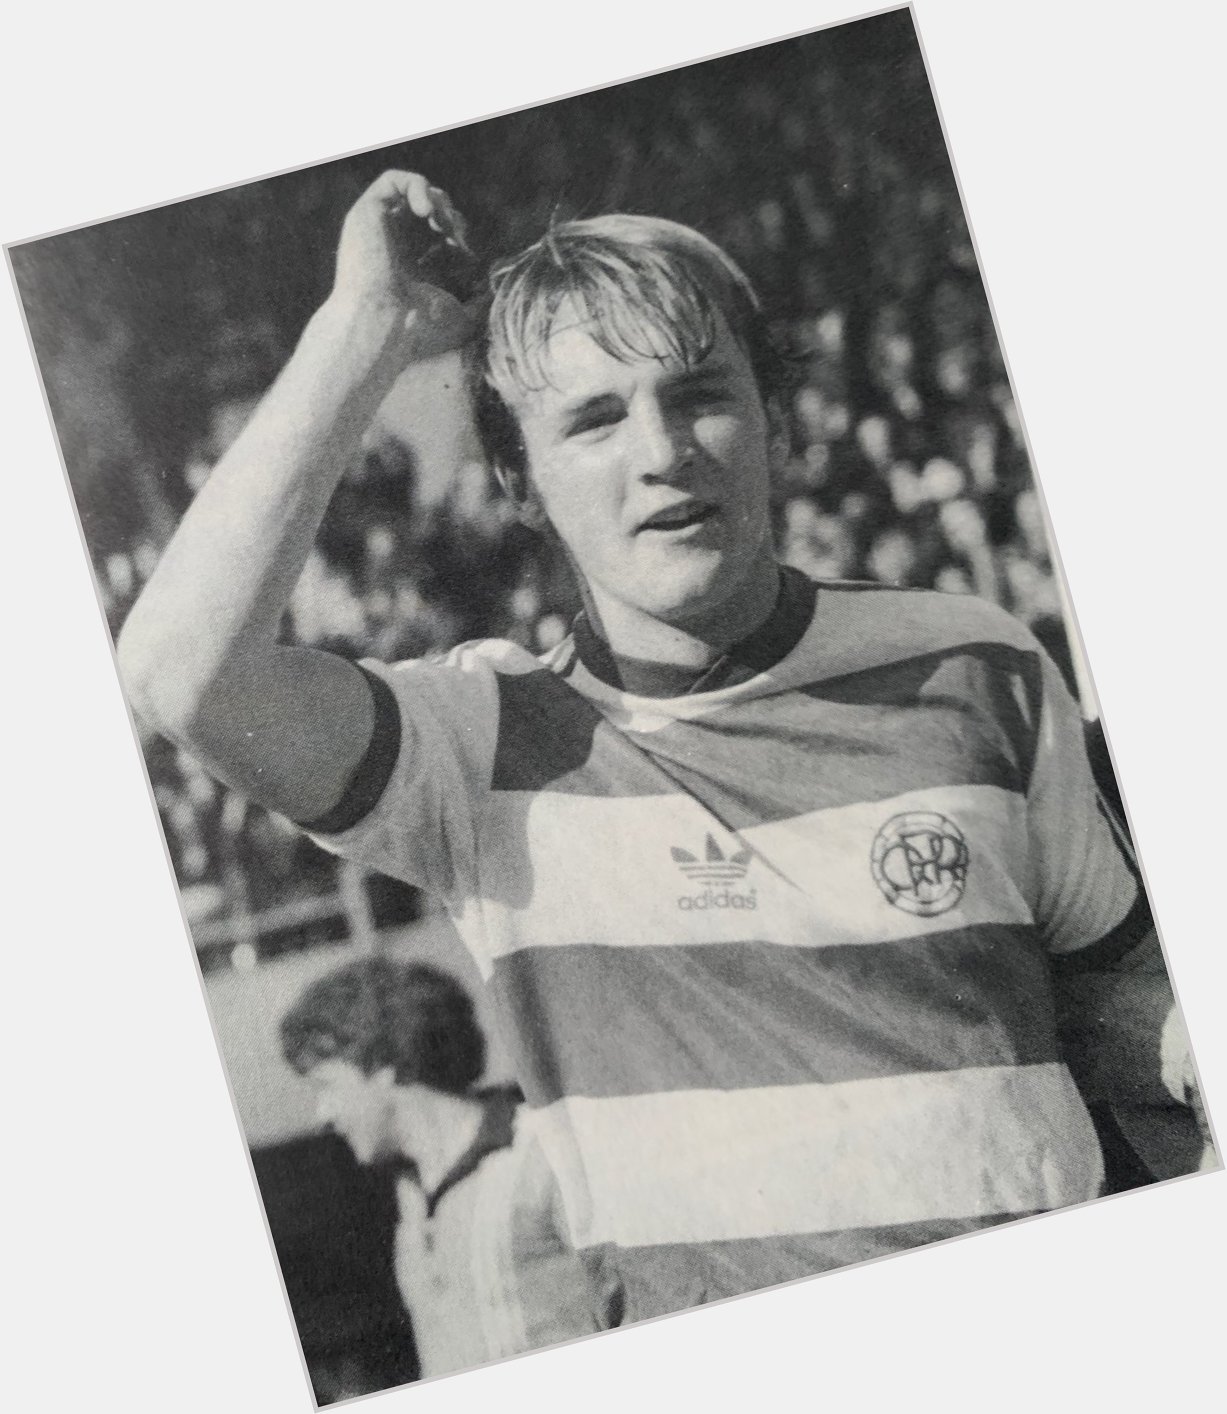 A Very Happy 63rd Birthday to former striker Paul Goddard    